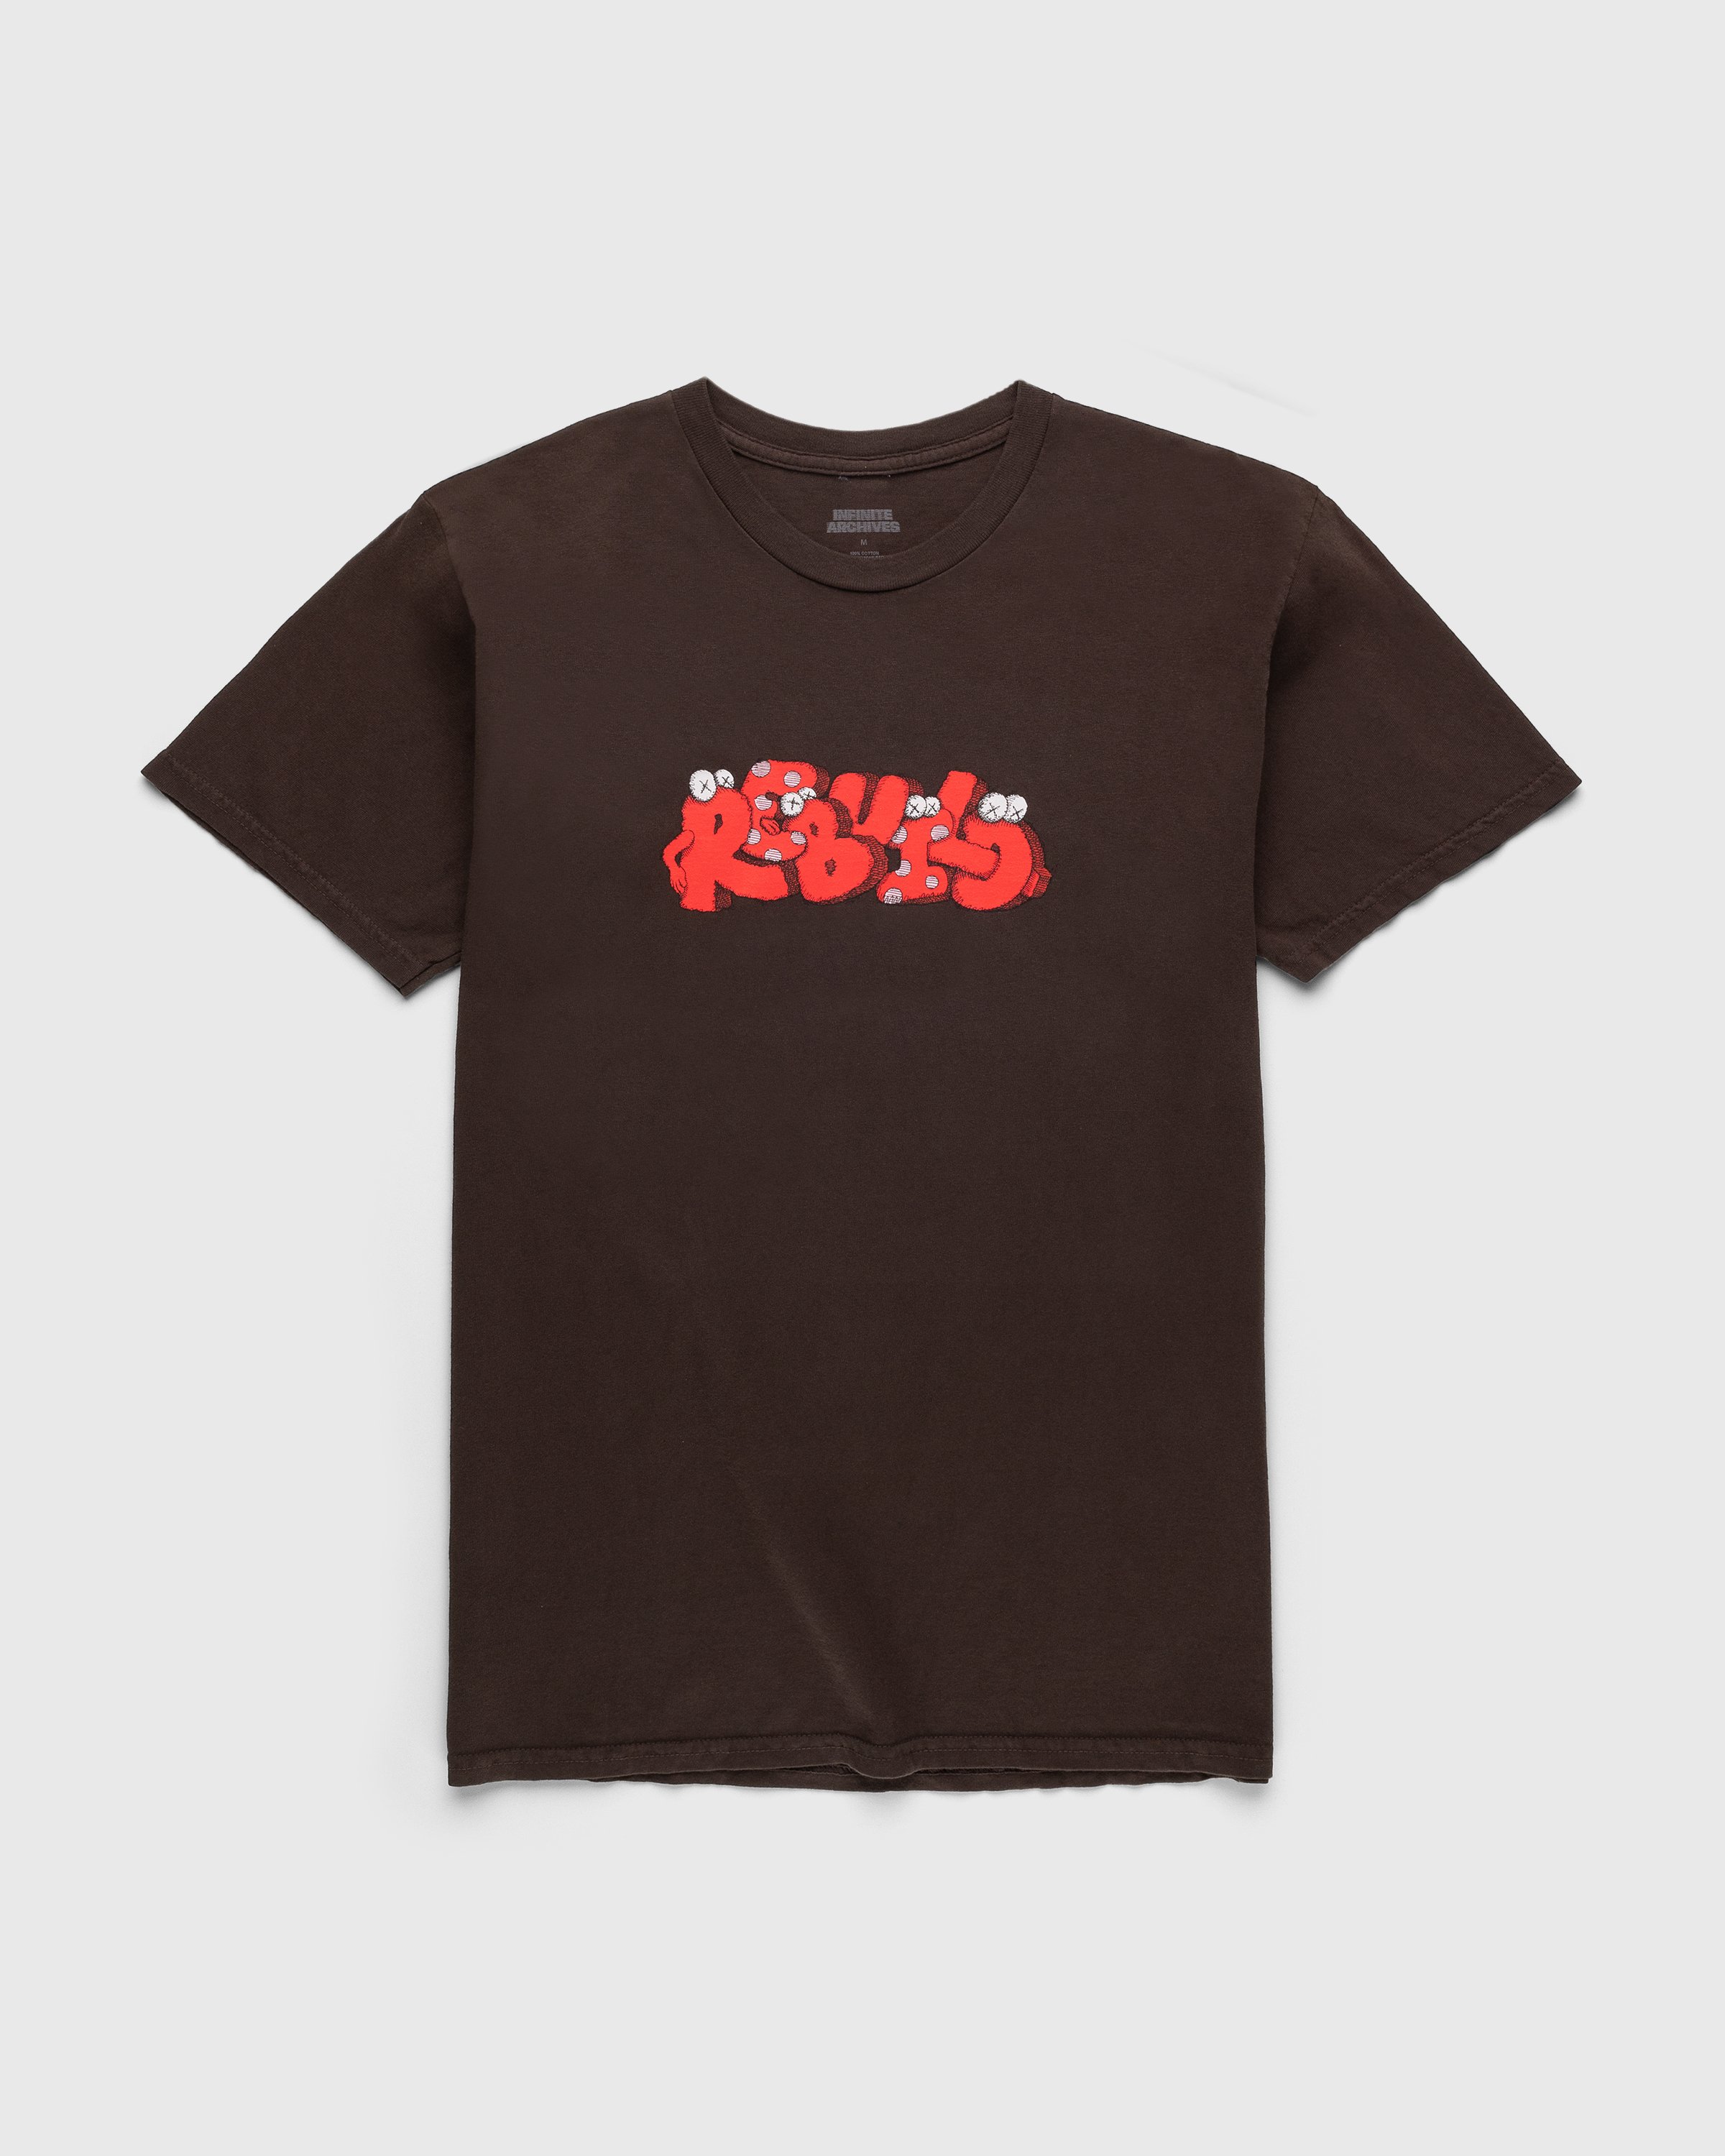 Infinite Archives x KAWS x Rebuild Foundation - Rebuild T-Shirt Brown - Clothing - Brown - Image 1